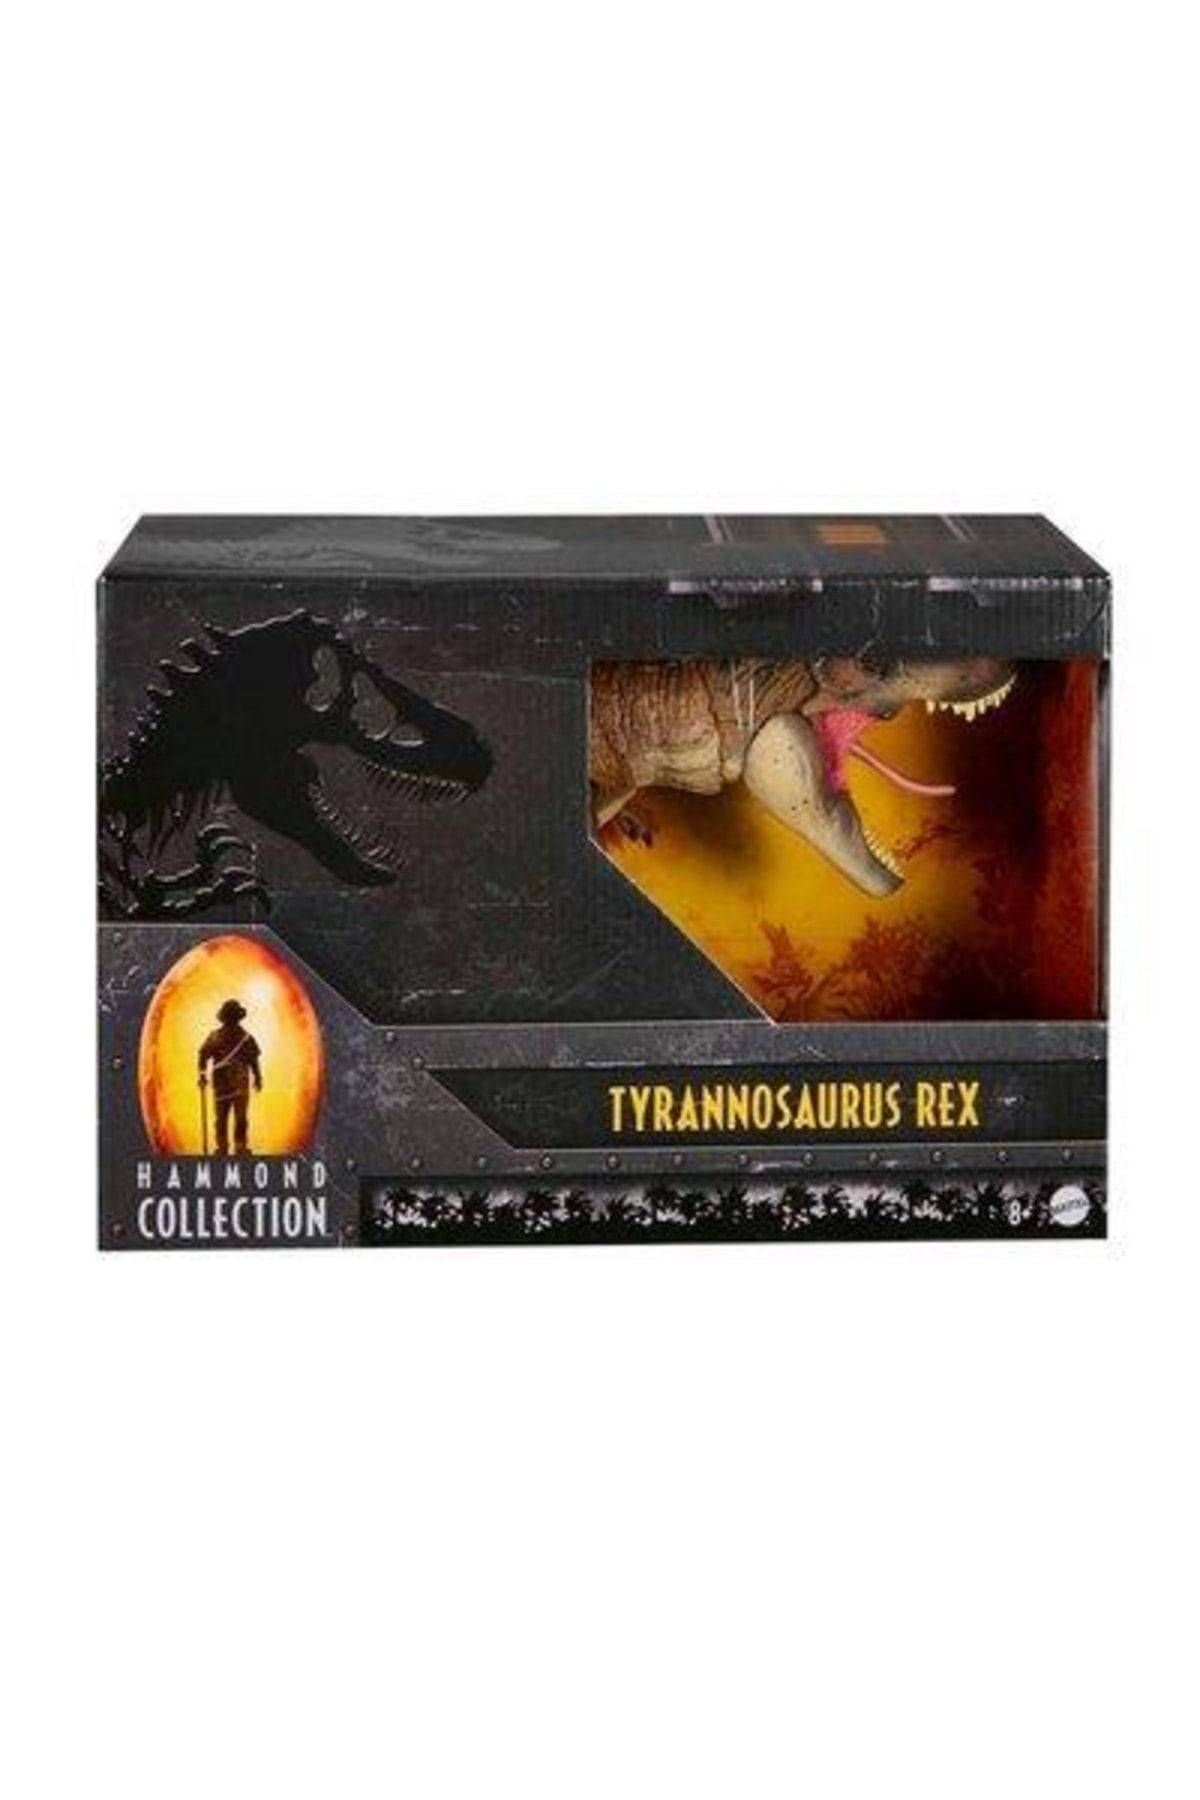 Jurassic World Yetişkin Koleksiyon T-rex Figürü Hfg66